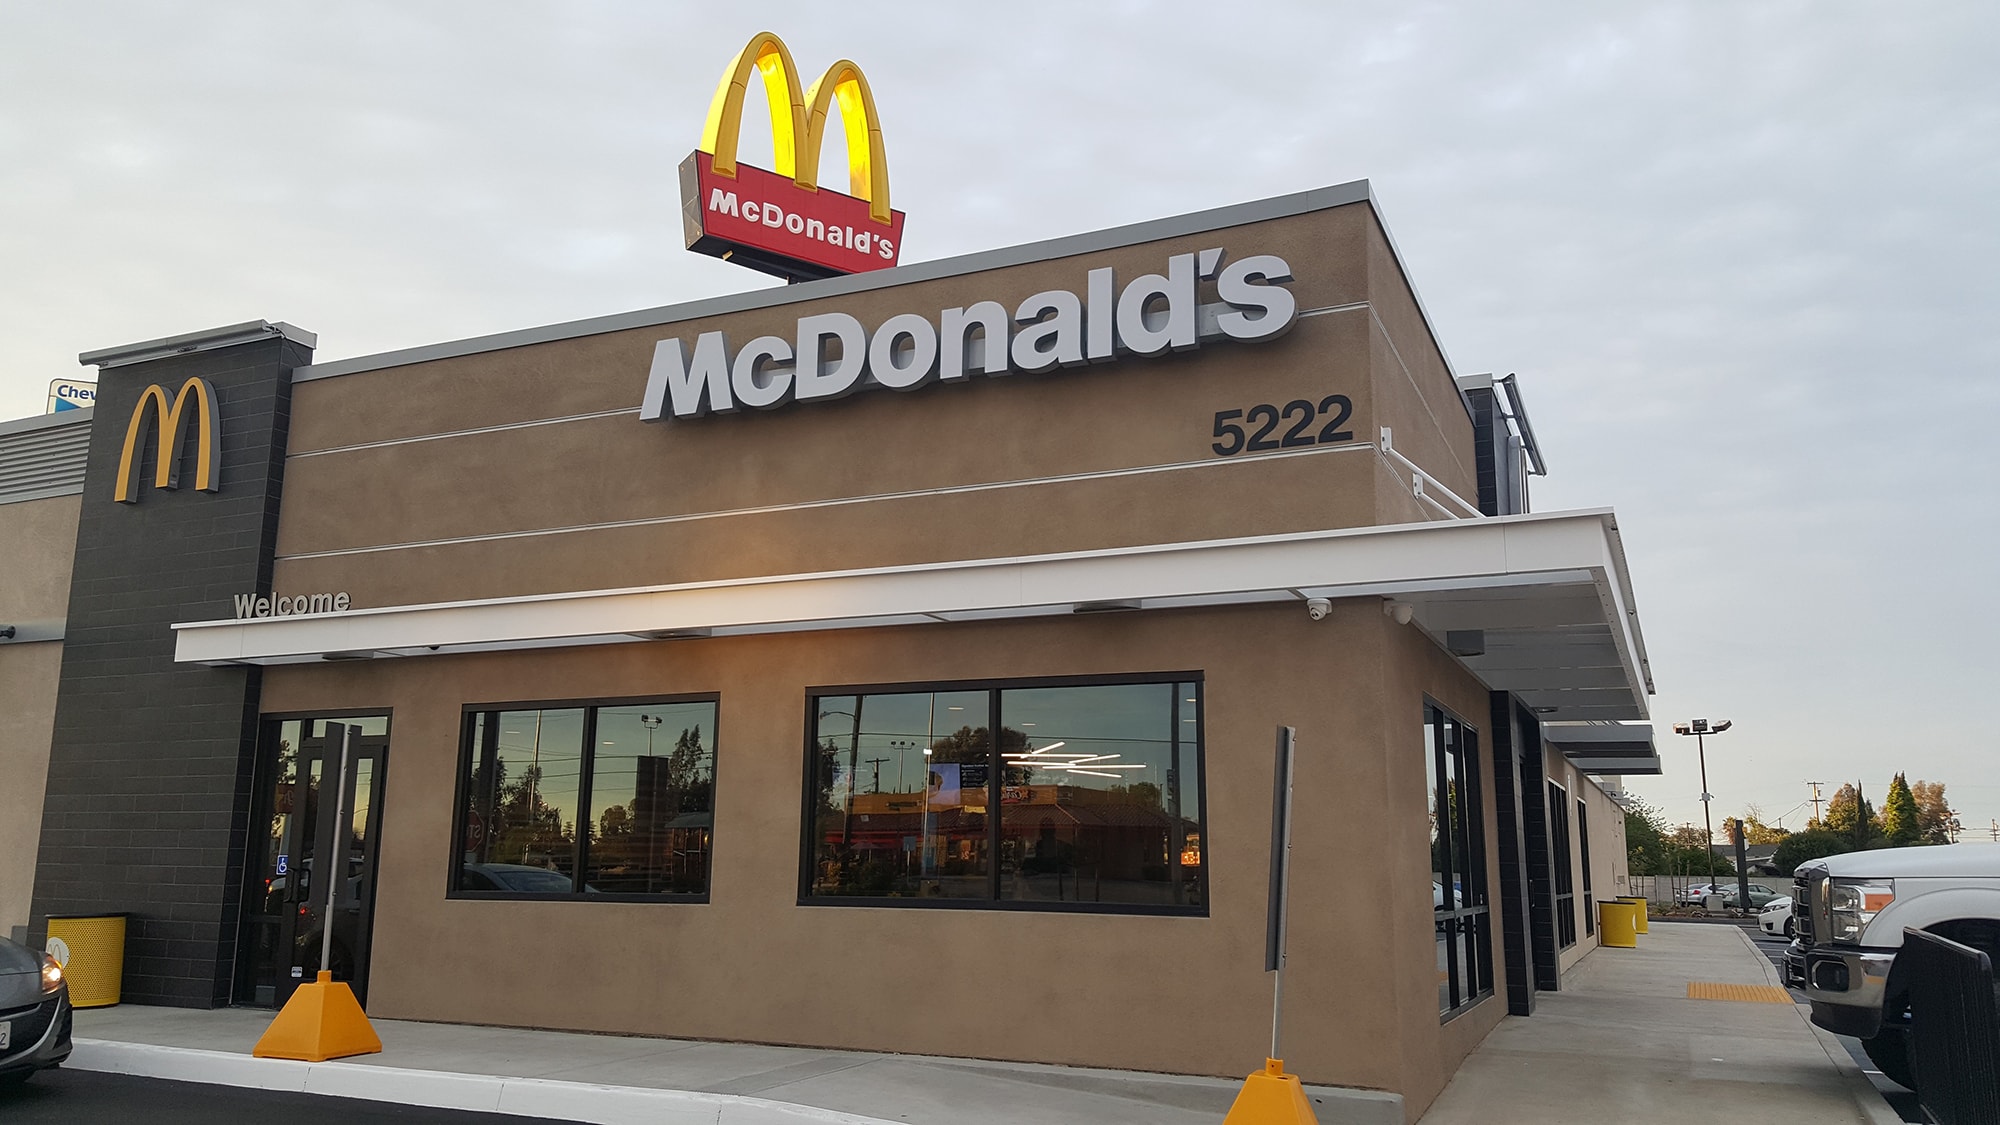 McDonald's restaurant exterior signage